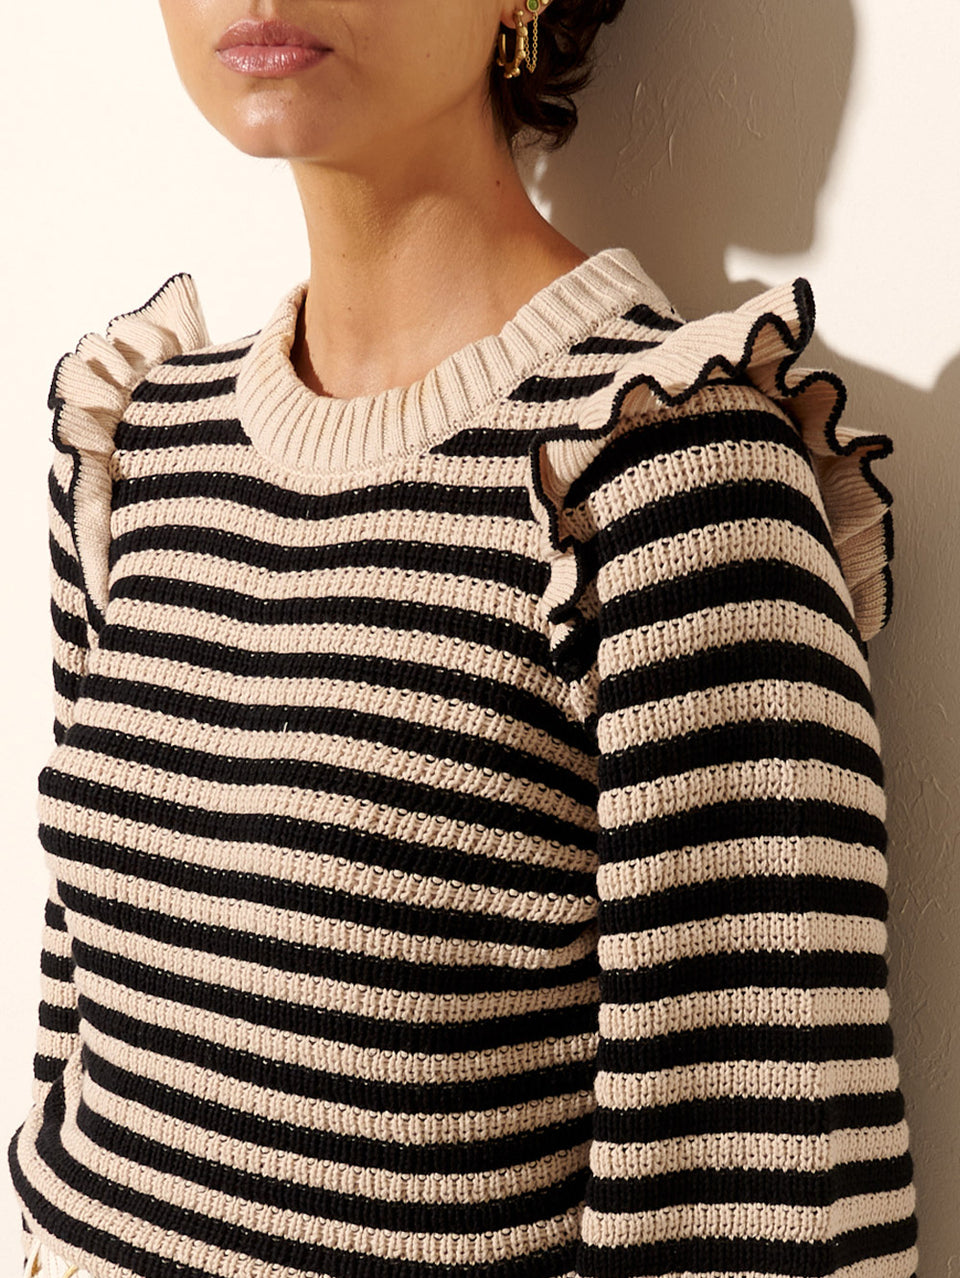 Anita Knit Top KIVARI | Model wears black and white striped knit jumper detail